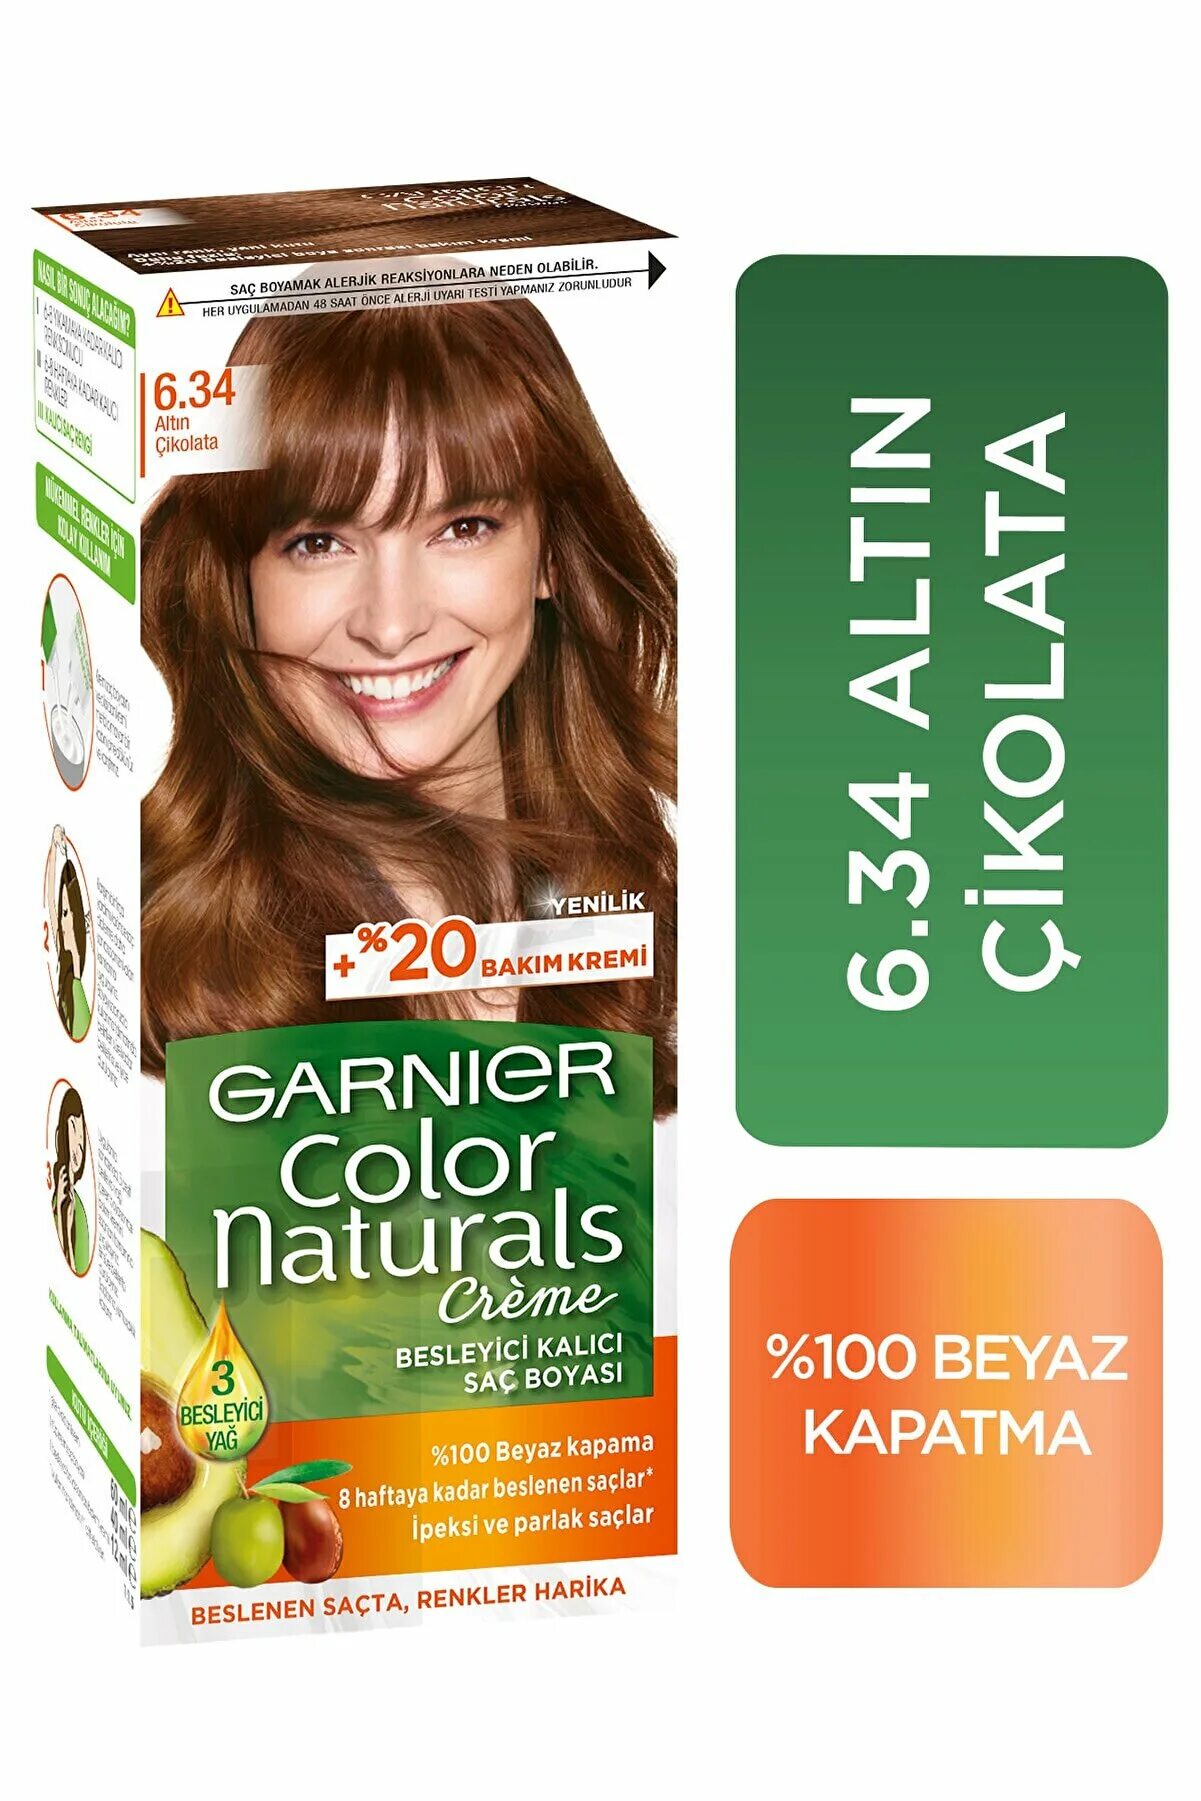 Garnier Color naturals краска для волос, 6.34 Chocolate. Garnier Color naturals 6.34 карамель. Краска гарньер карамель 6.34. Краска для волос Garnier карамель цвет 6.34.